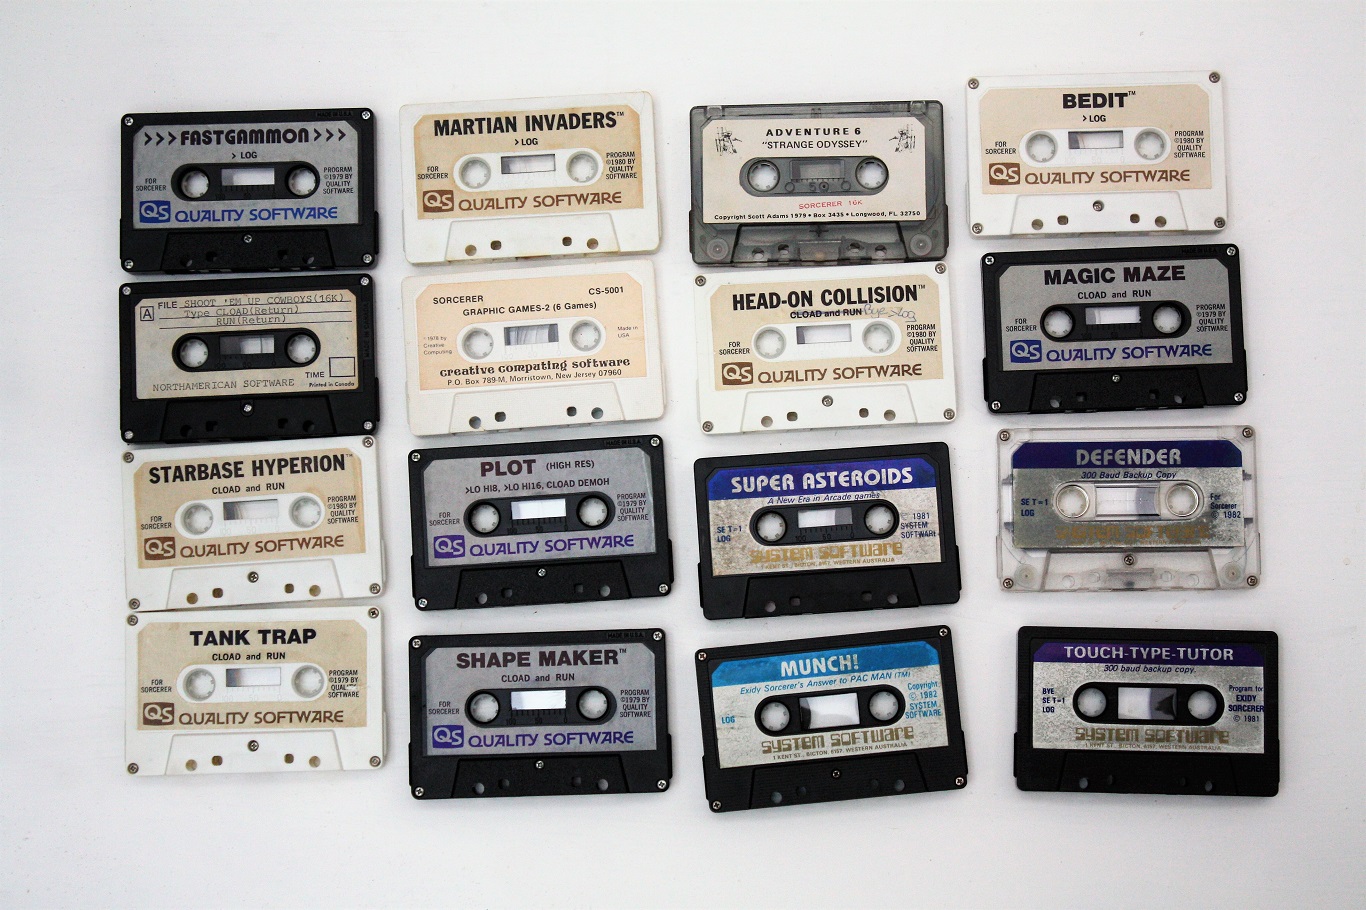 Exidy Sorcerer I - data cassettes